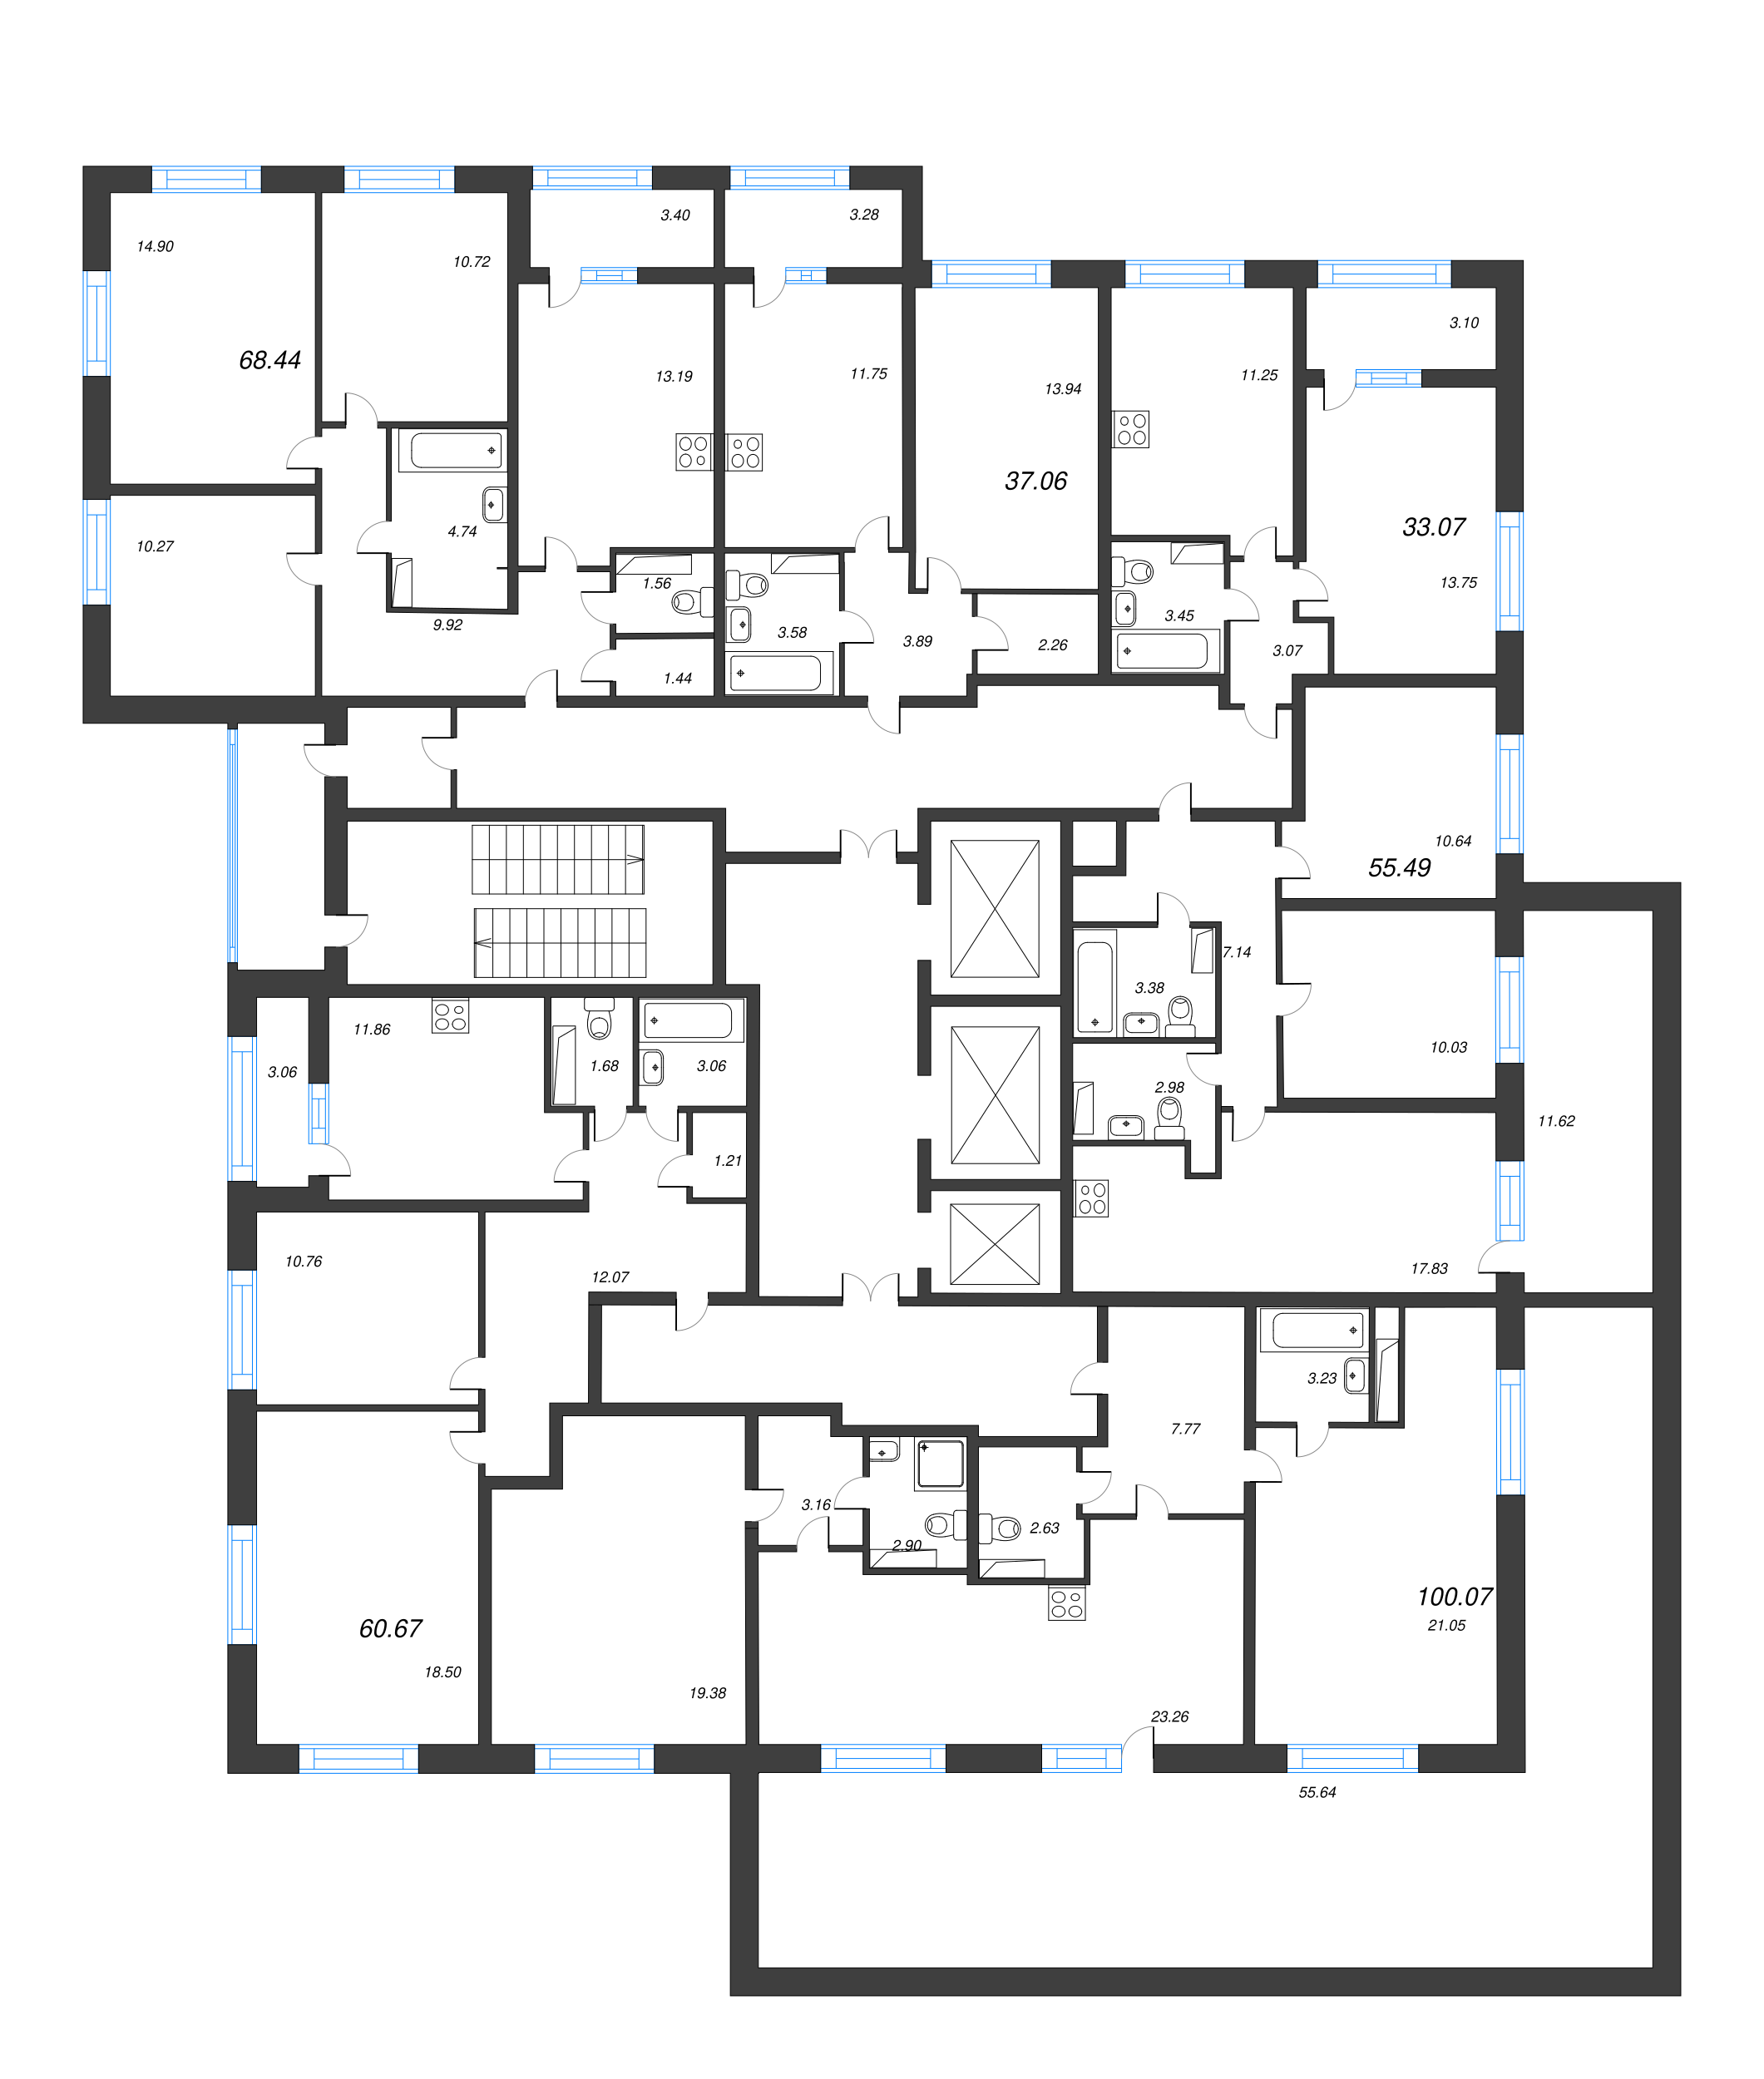 3-комнатная (Евро) квартира, 55.49 м² - планировка этажа